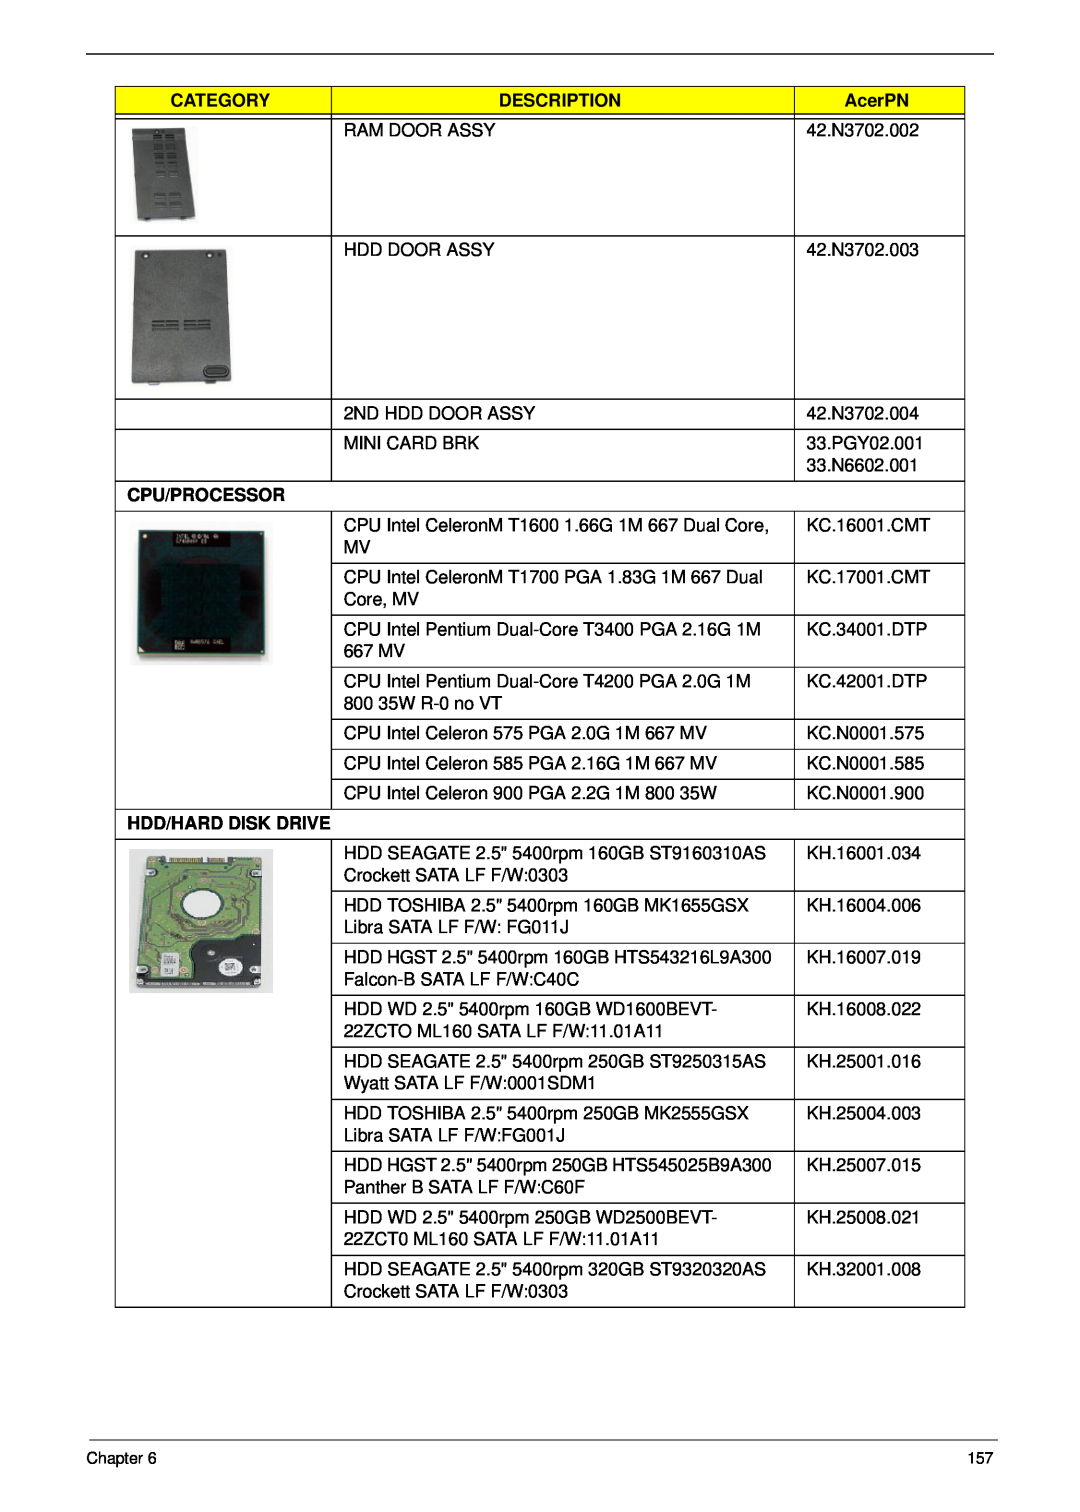 Acer 7315, 7715Z manual Category, Description, AcerPN, Cpu/Processor, Hdd/Hard Disk Drive 